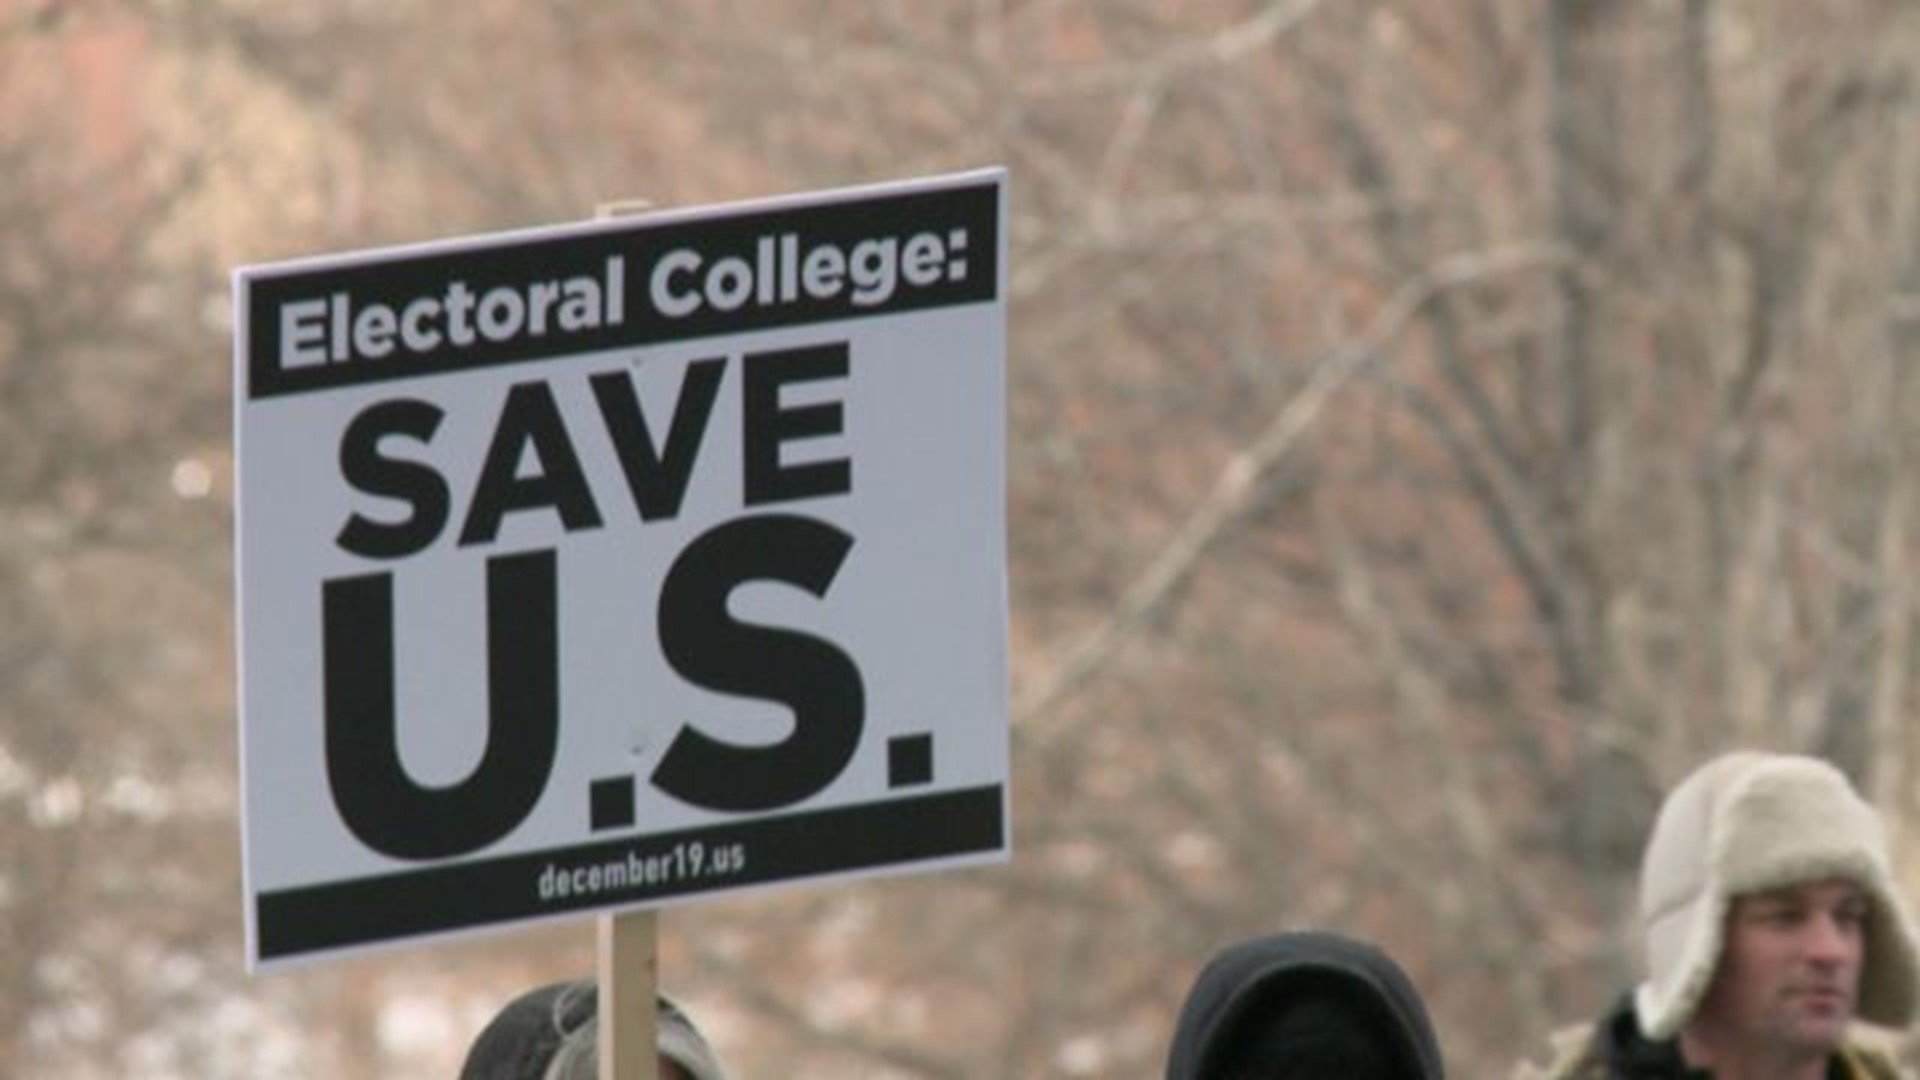 Electoral College votes, but protestors continue fighting